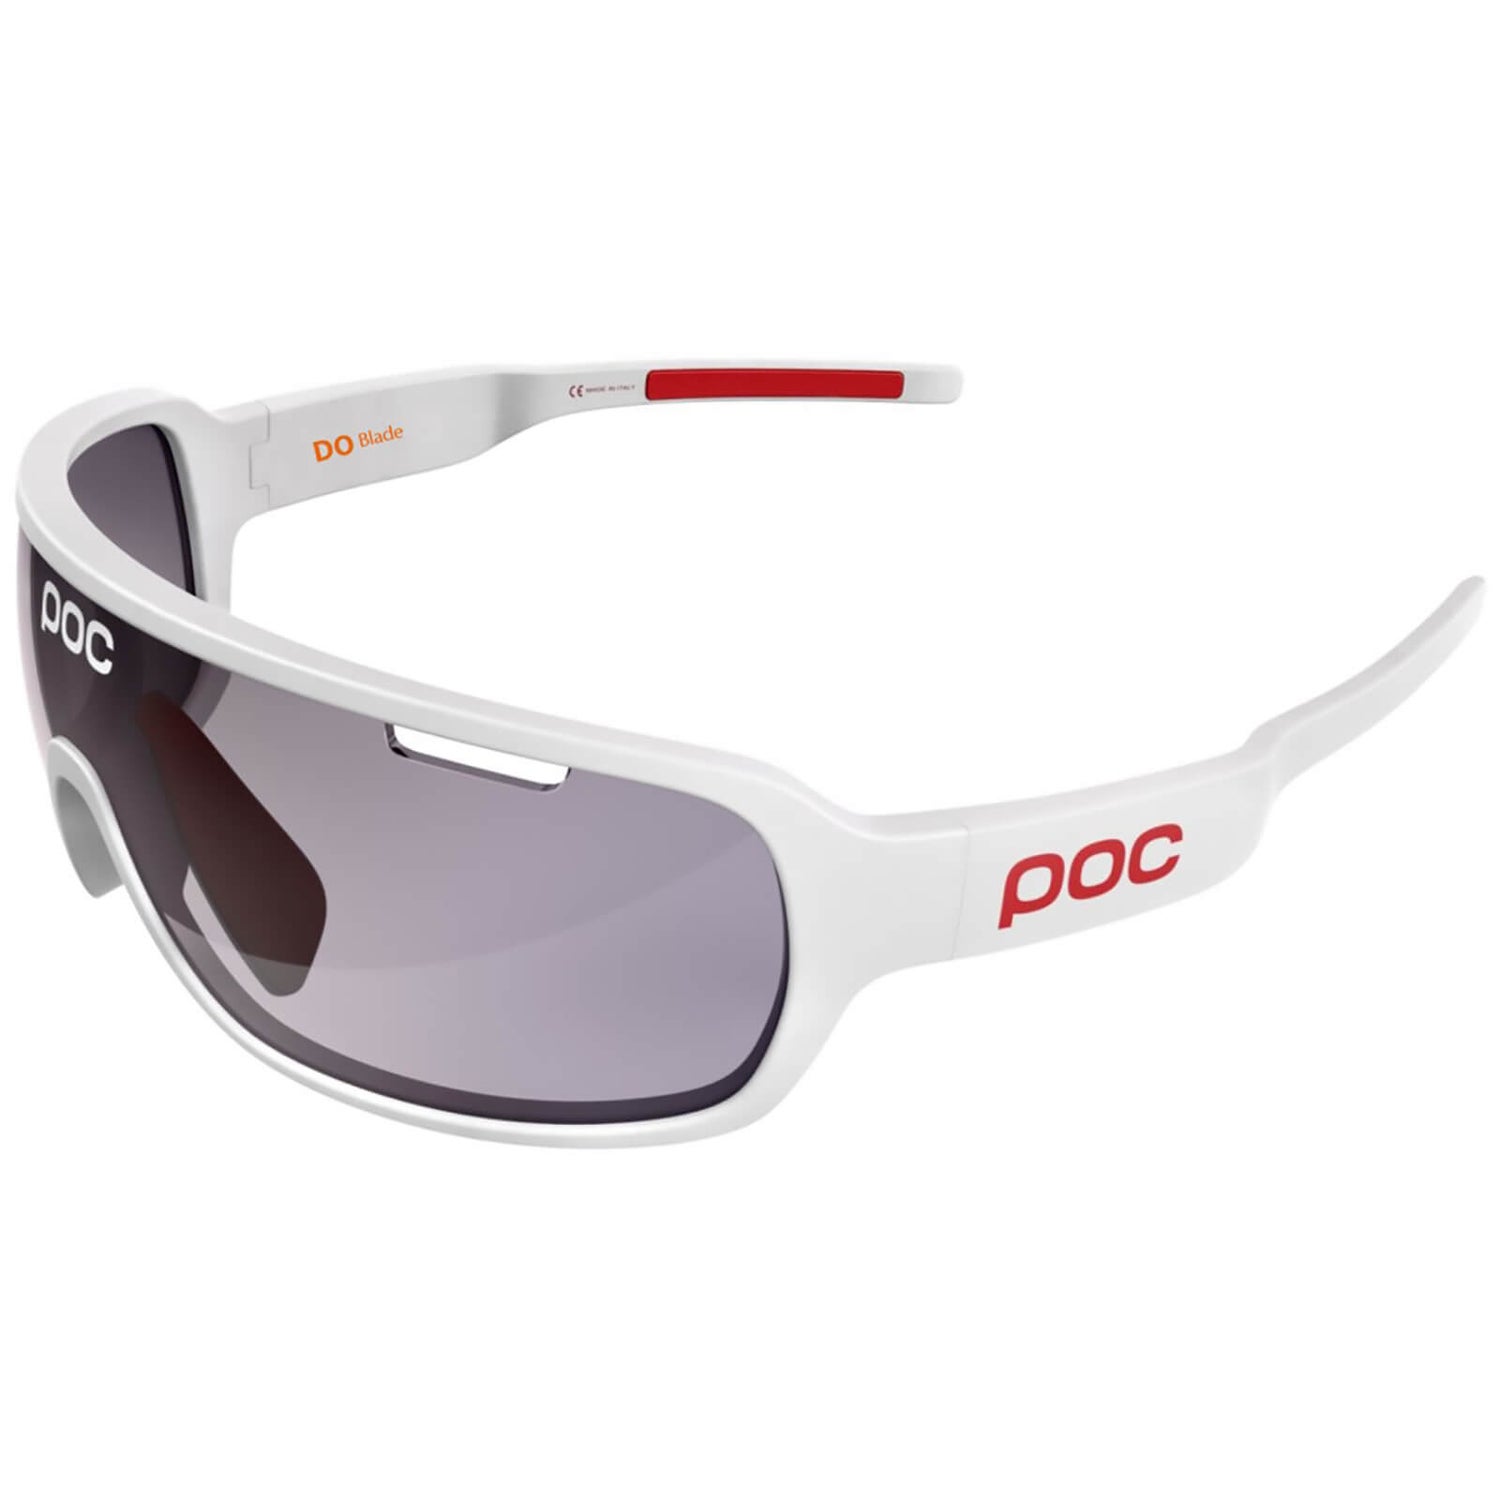 POC DO Blade Sunglasses   Hydrogen White/Bohrium Red   ProBikeKit